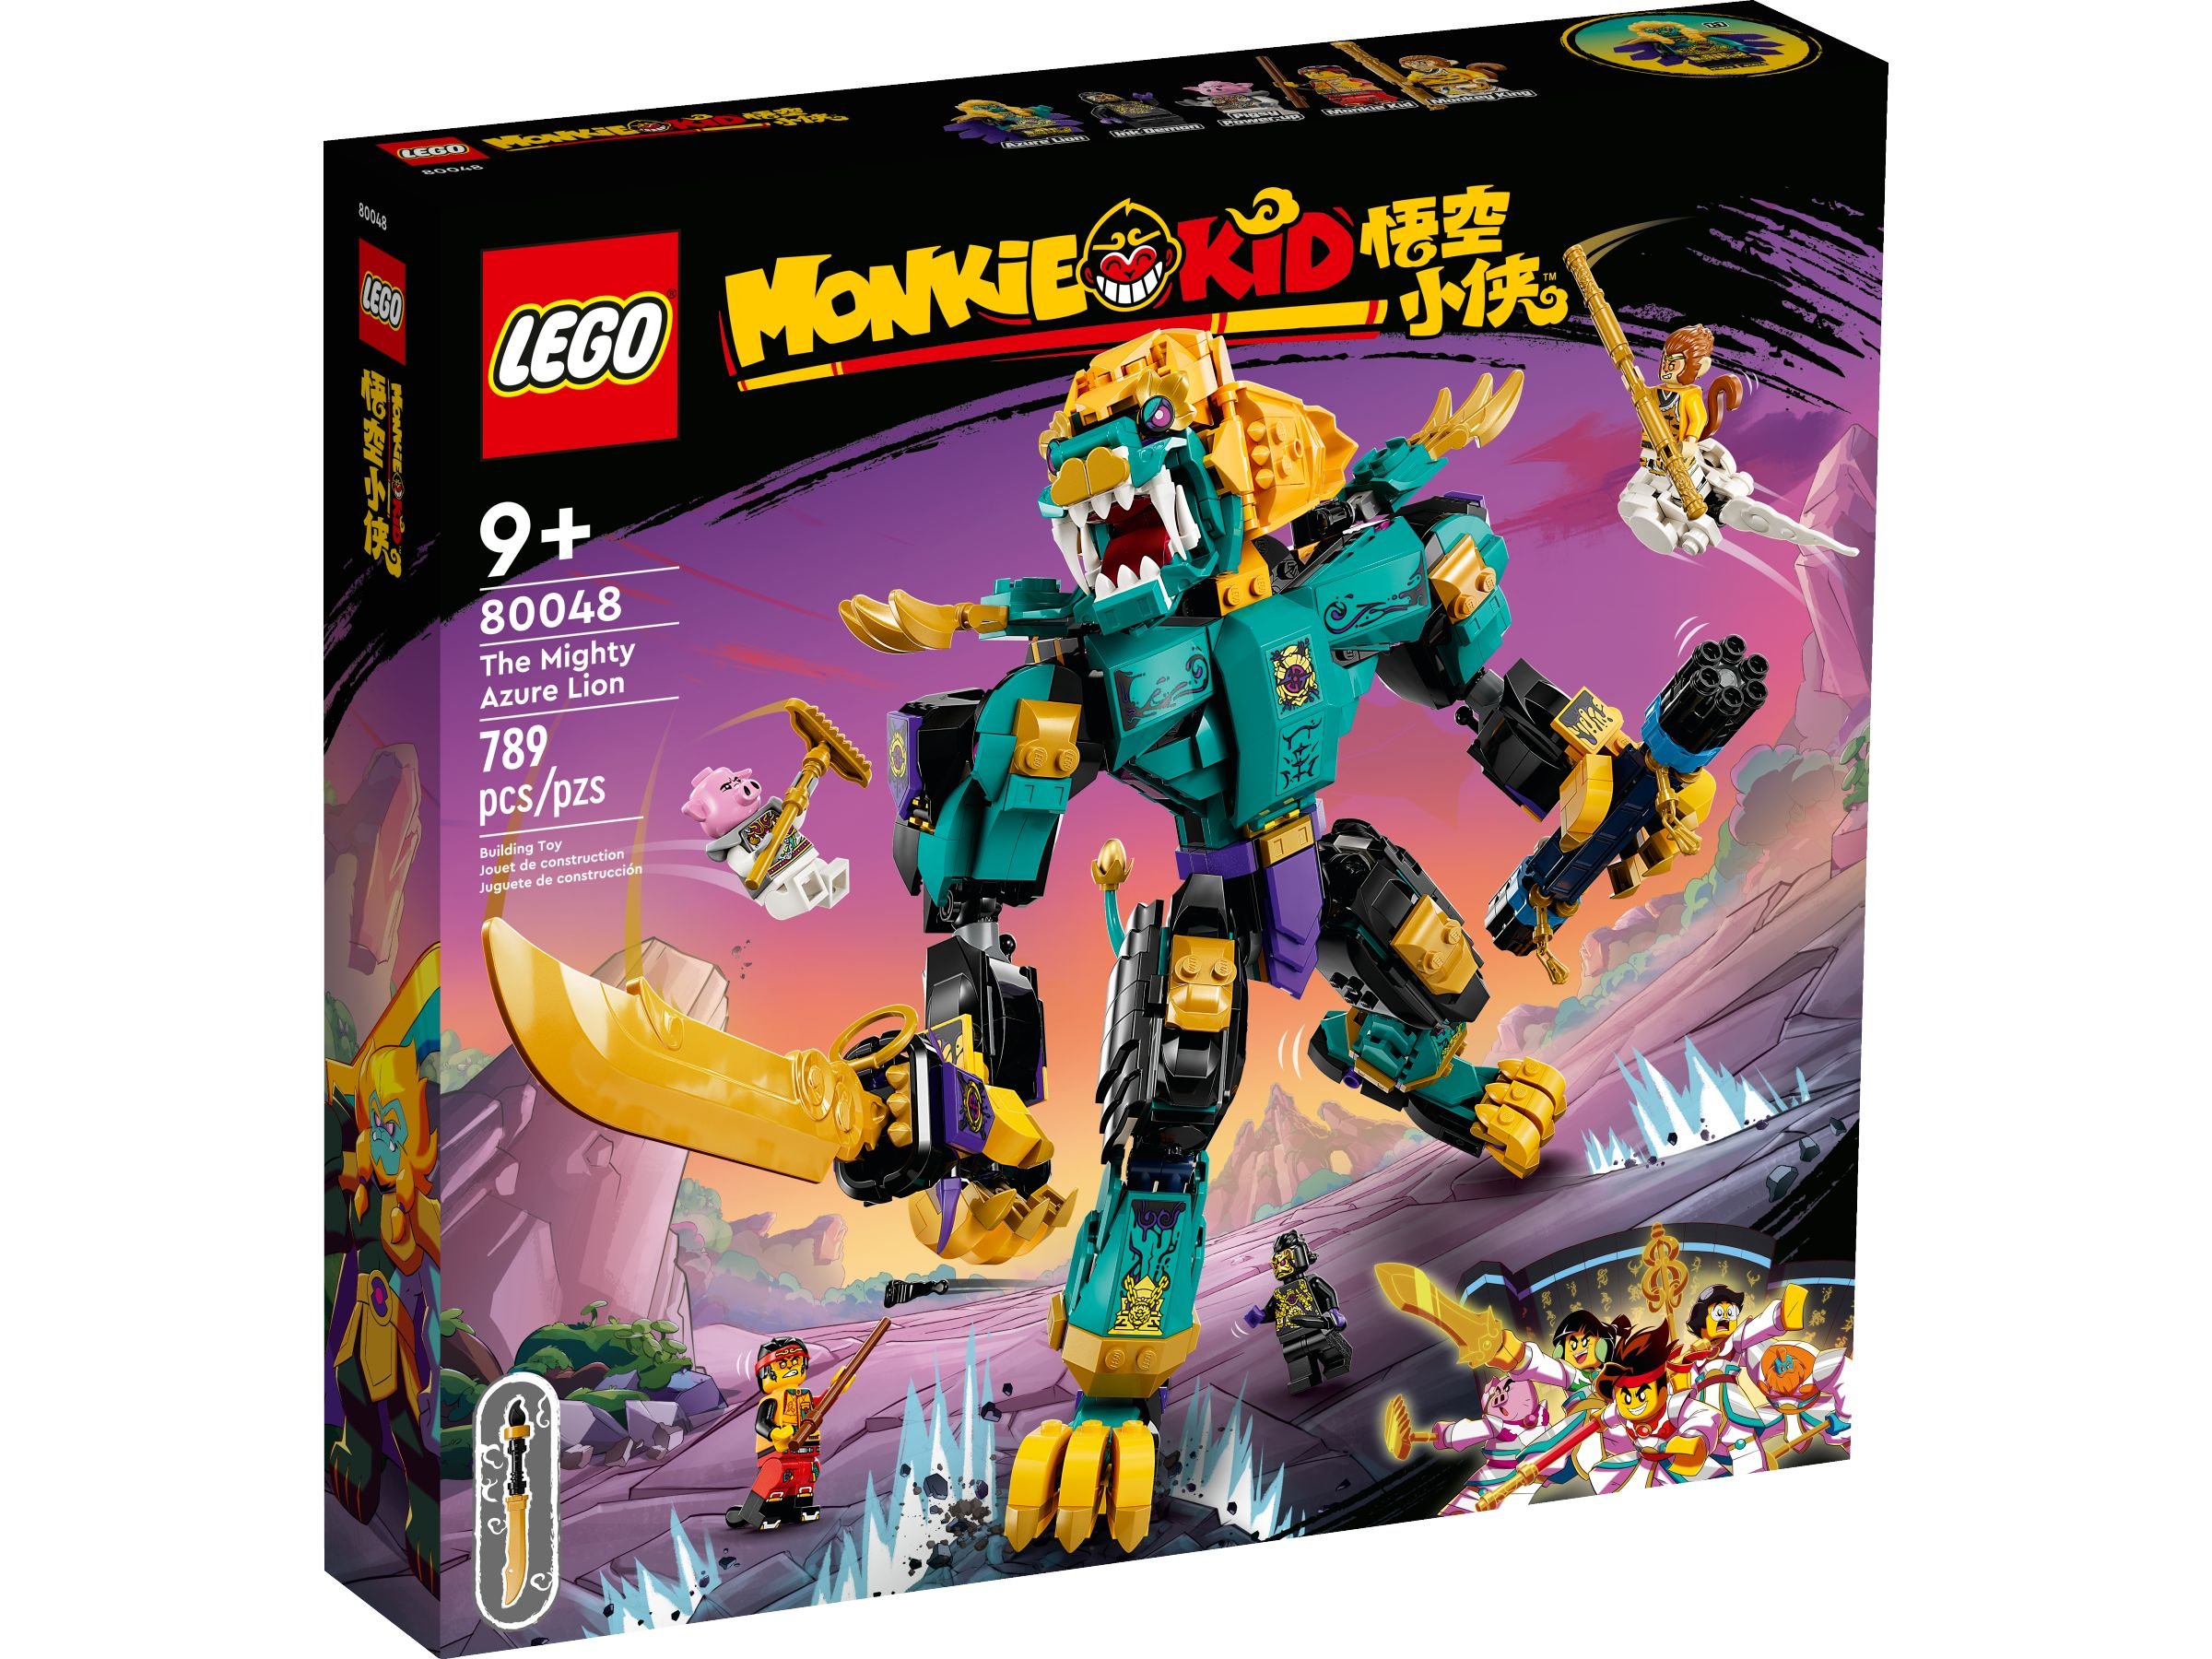 LEGO Monkie Kid 80048 Der mächtige Azure Lion LEGO_80048_Box1_v39.jpg